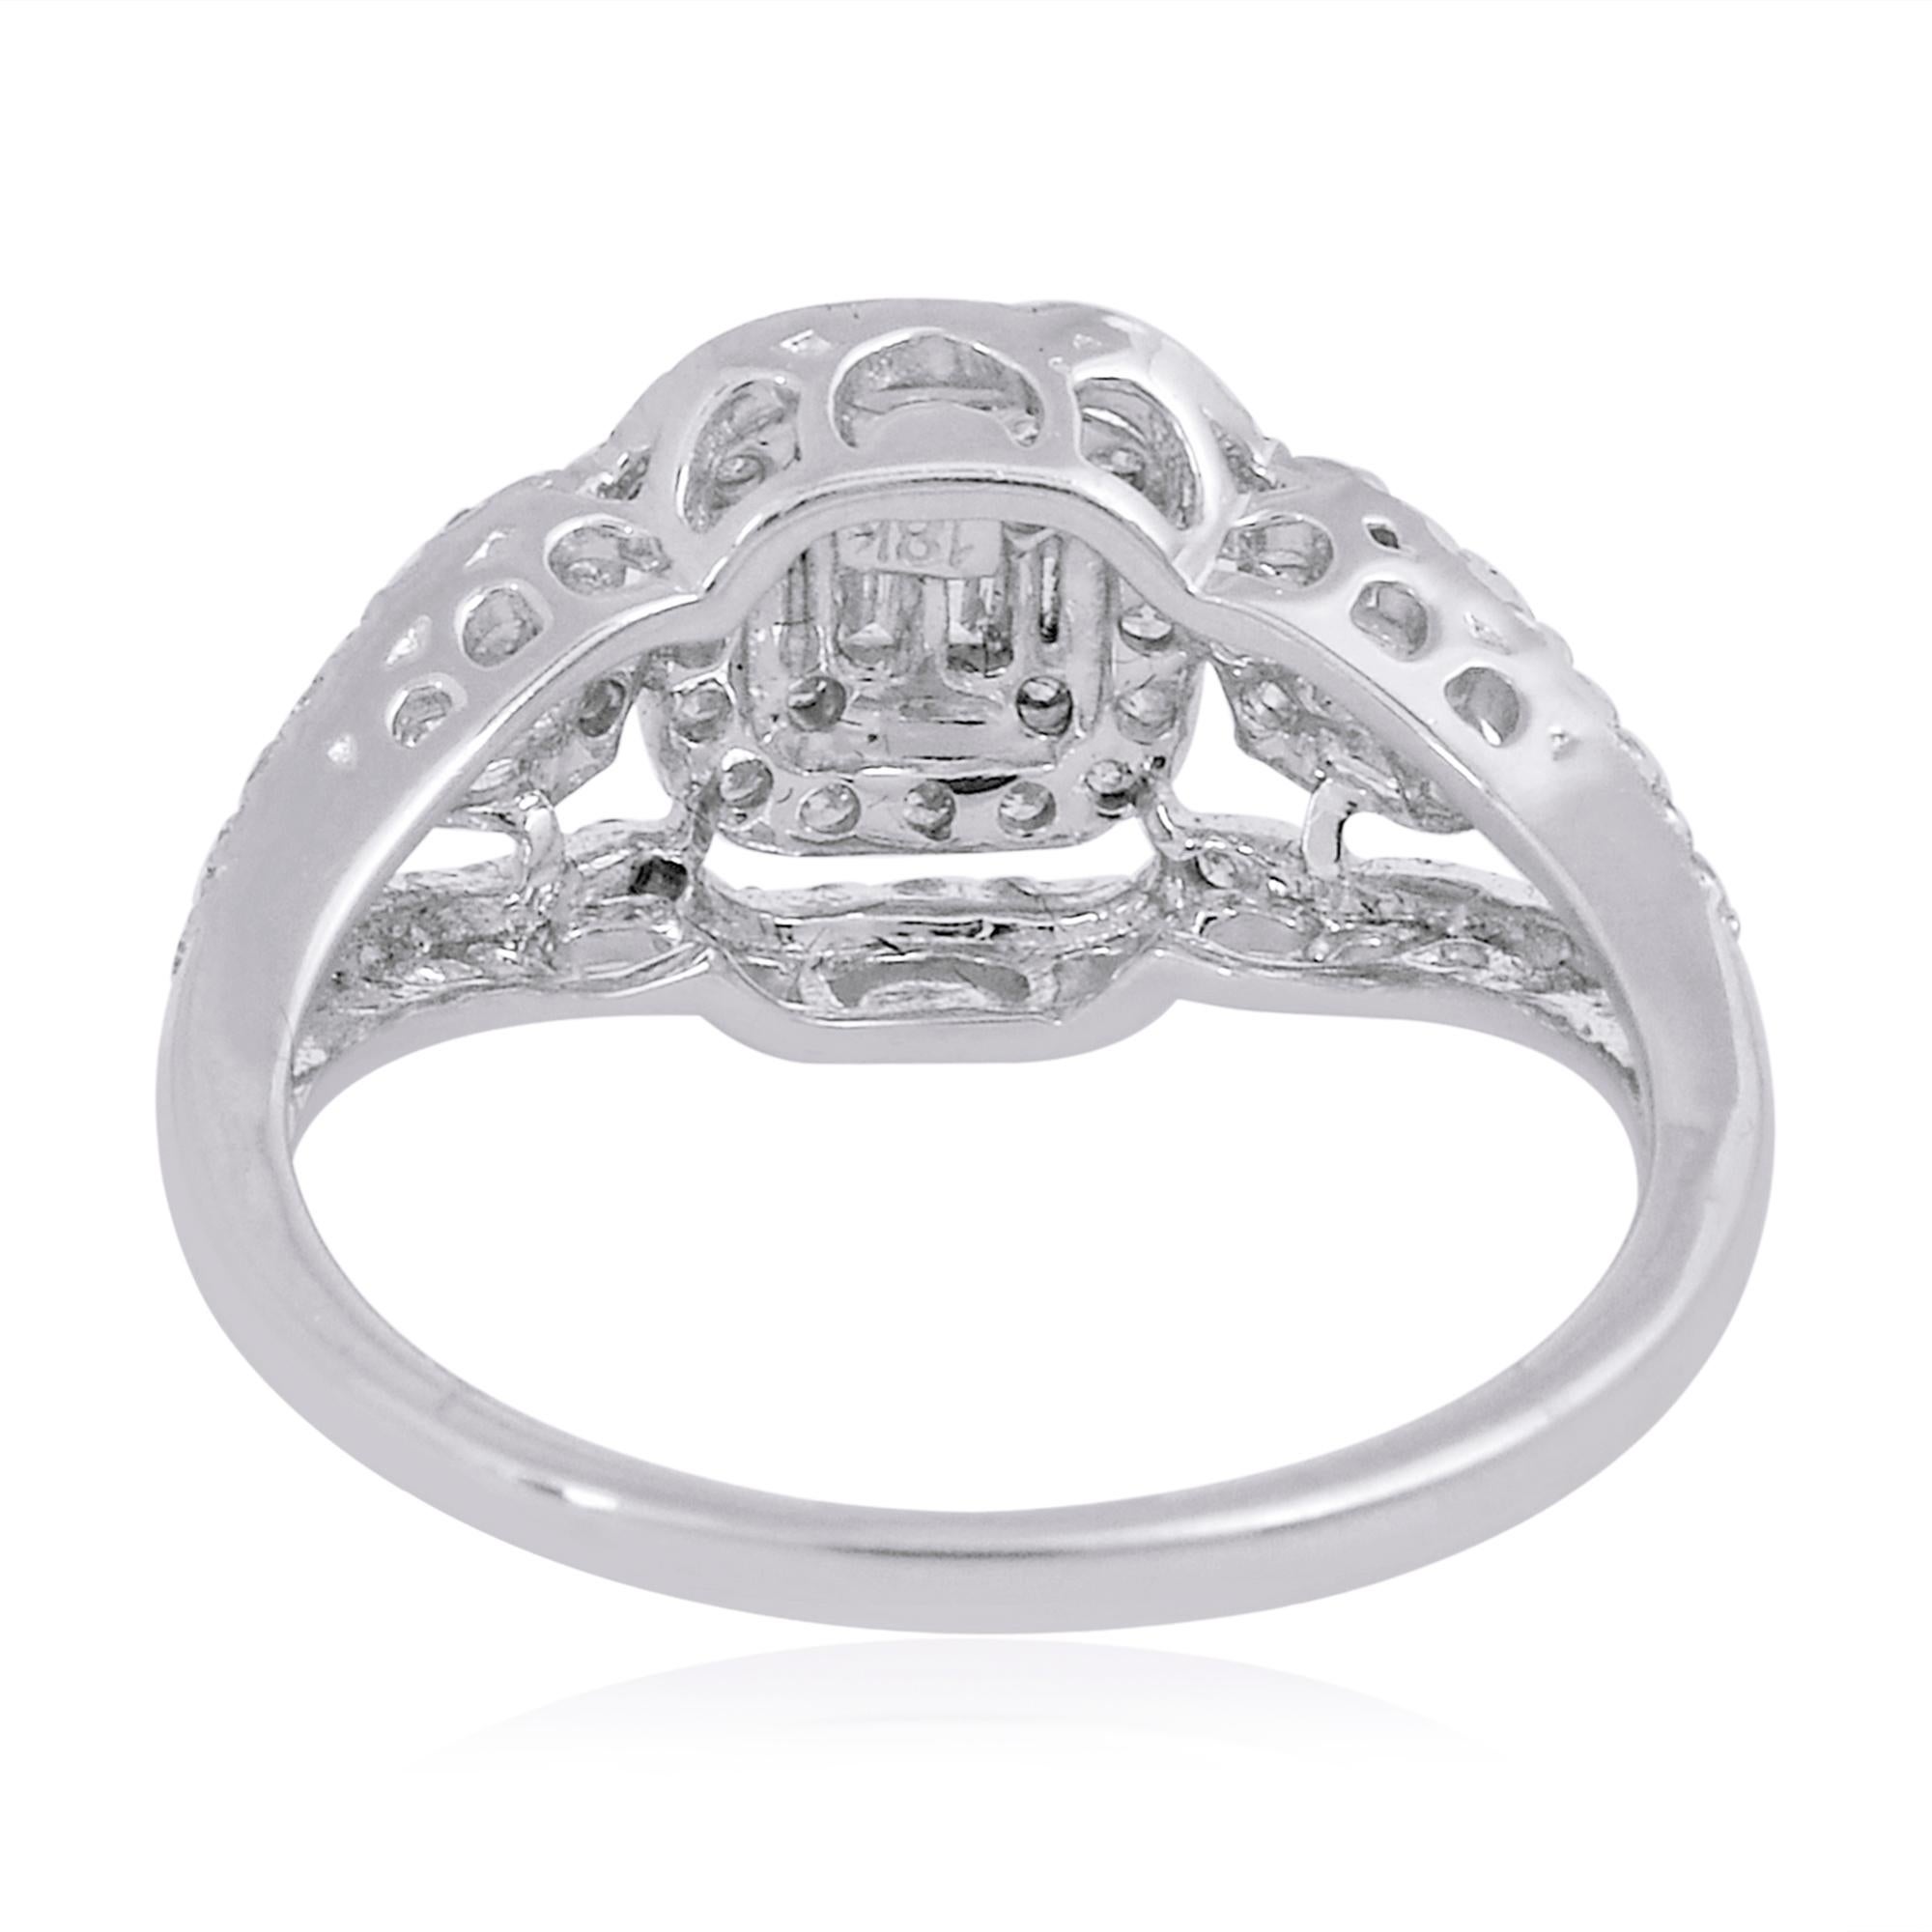 For Sale:  0.85 Carat SI Clarity HI Color Baguette Diamond Ring 18 Karat White Gold Jewelry 2